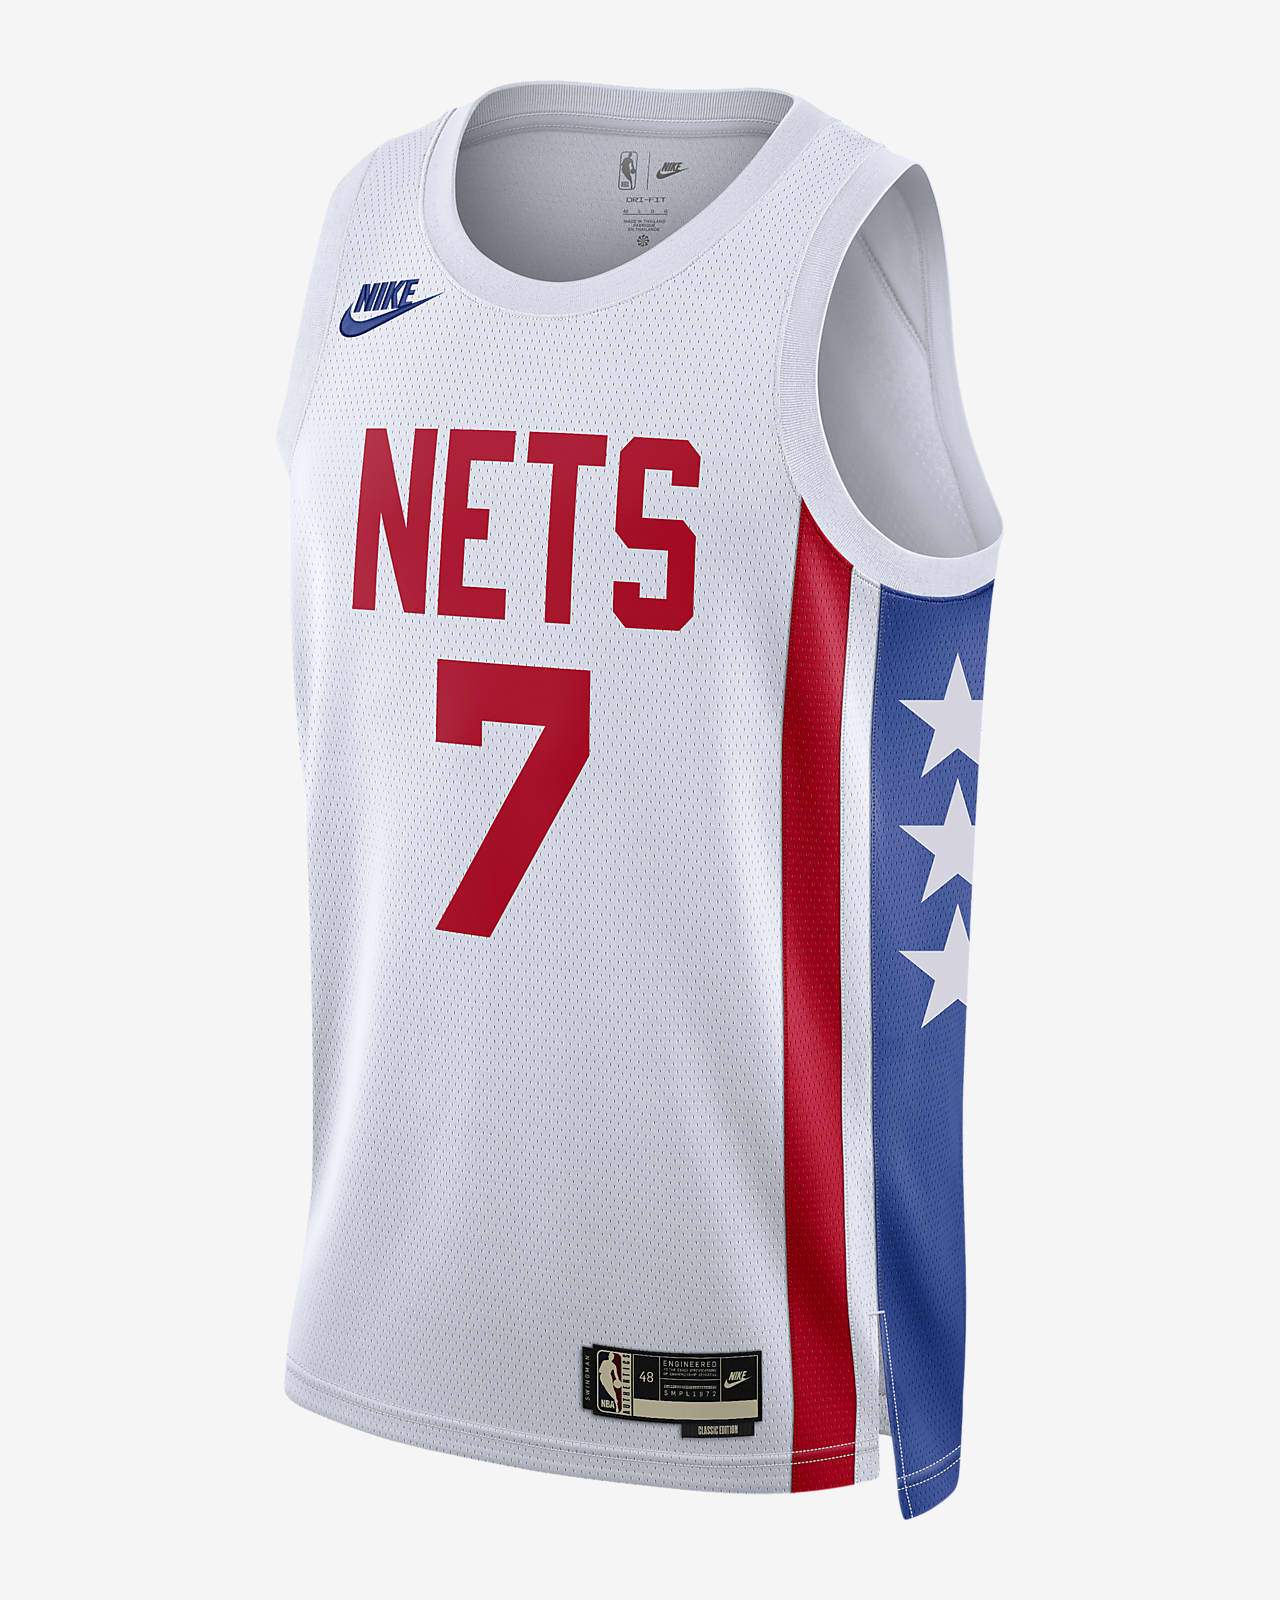 Nets unveil 'Stars and Stripes' Classic Edition Uniform